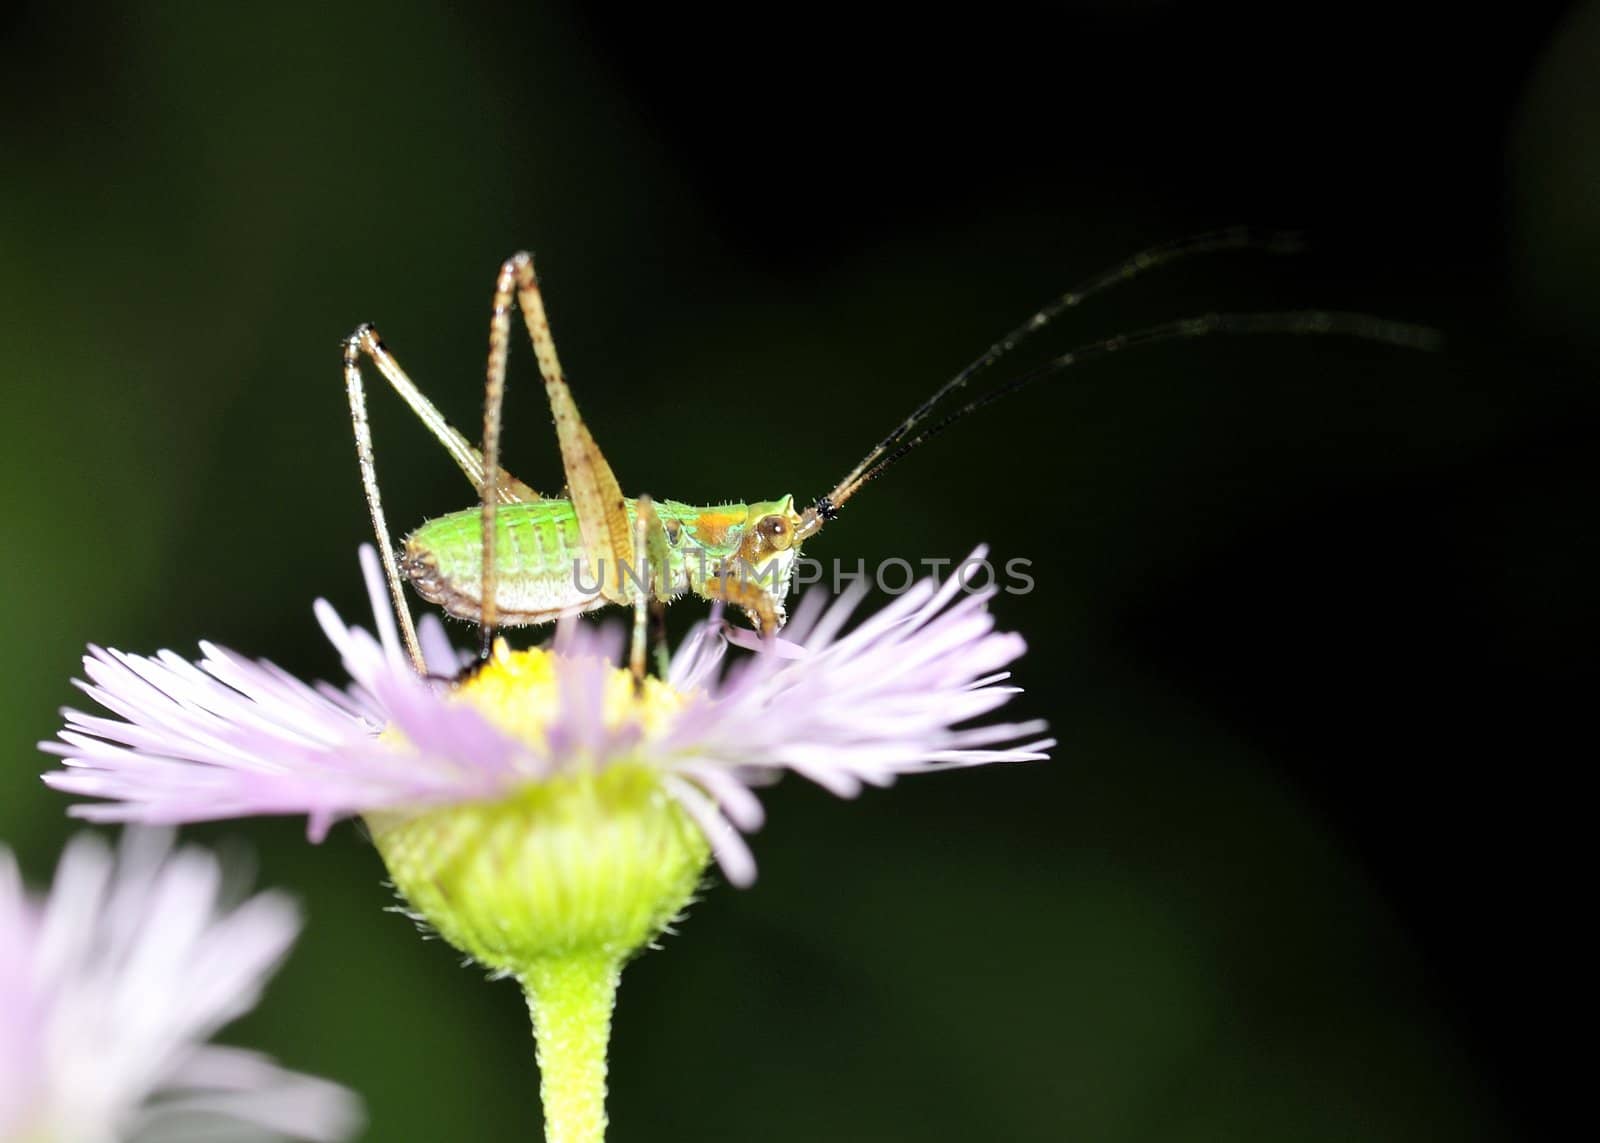 A kadydid nymph perched on a flower.